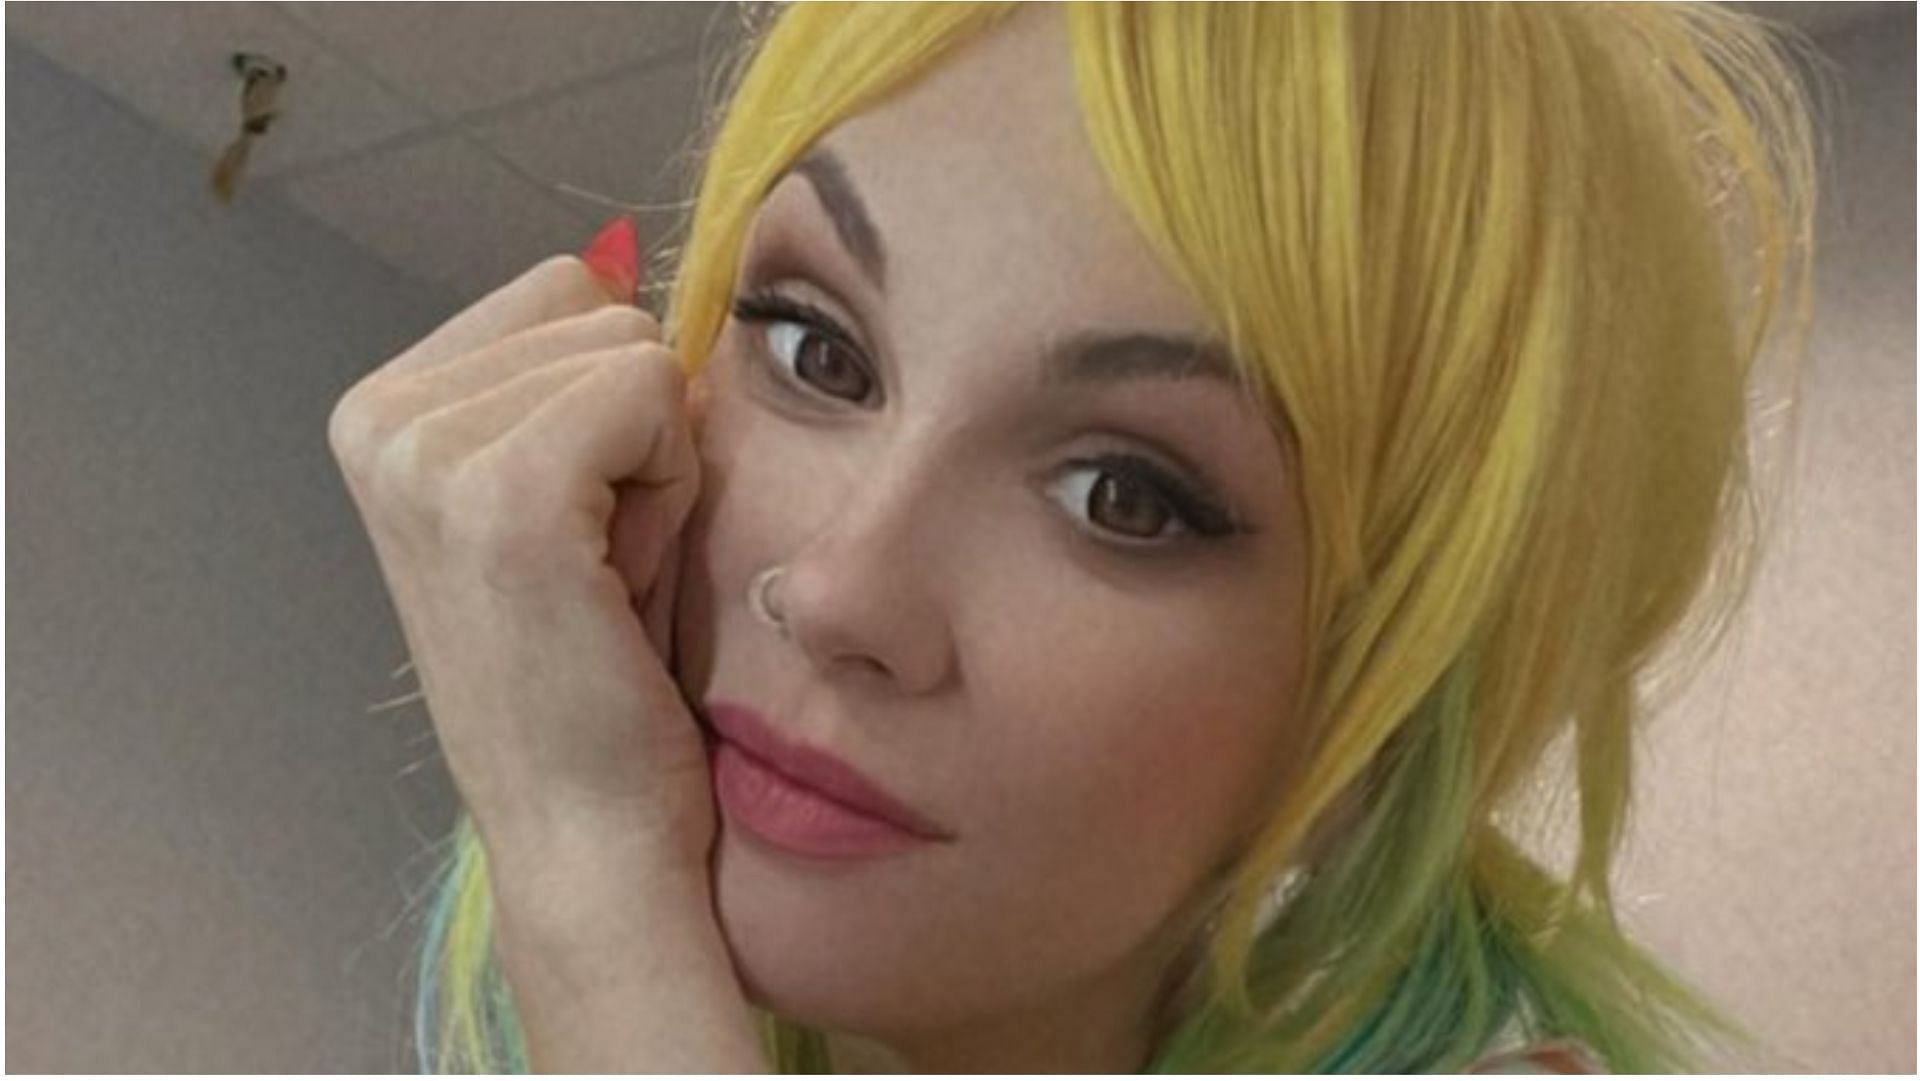 Laney Chantal was a popular makeup artist (Image via laneychantal/Instagram)